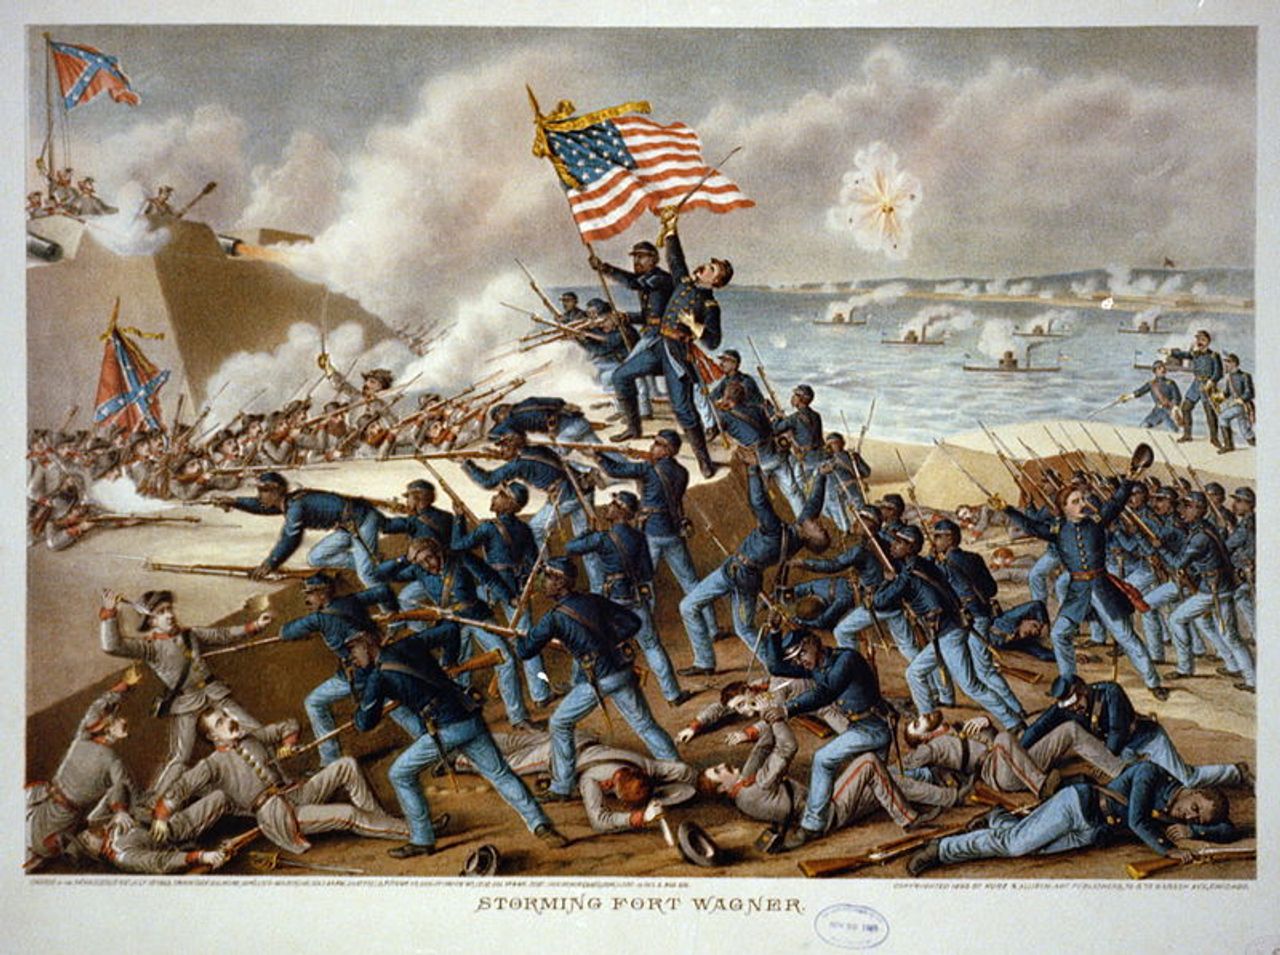 54th Massachusetts Regiment charging toward Fort Wagner, South Carolina, 1863